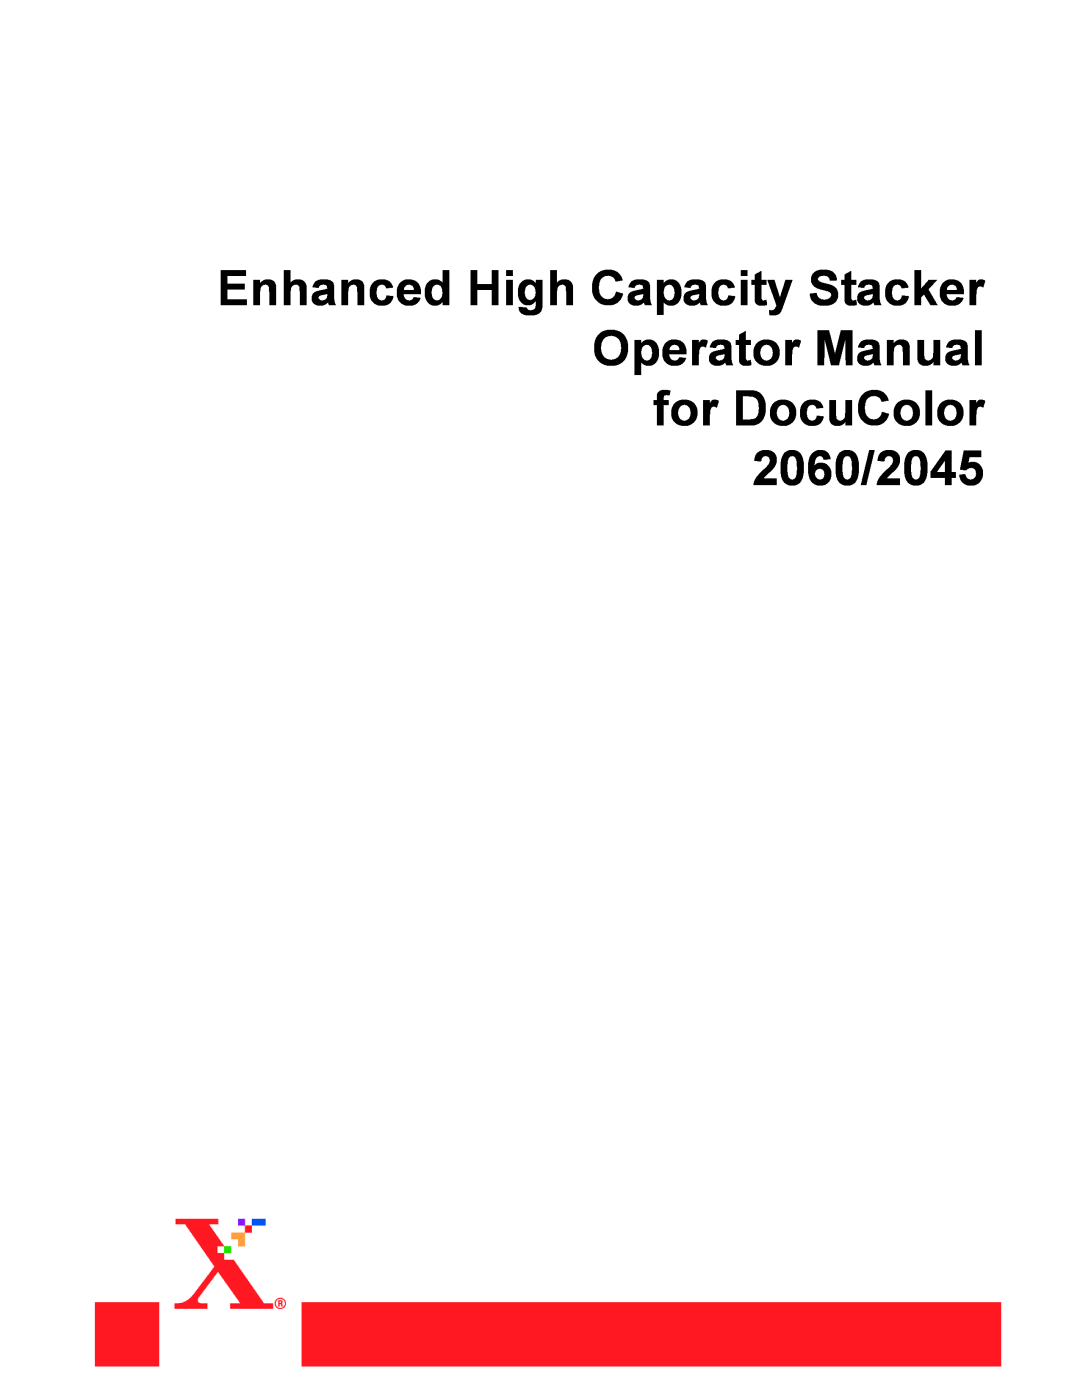 Xerox manual Enhanced High Capacity Stacker Operator Manual for DocuColor, 2060/2045 